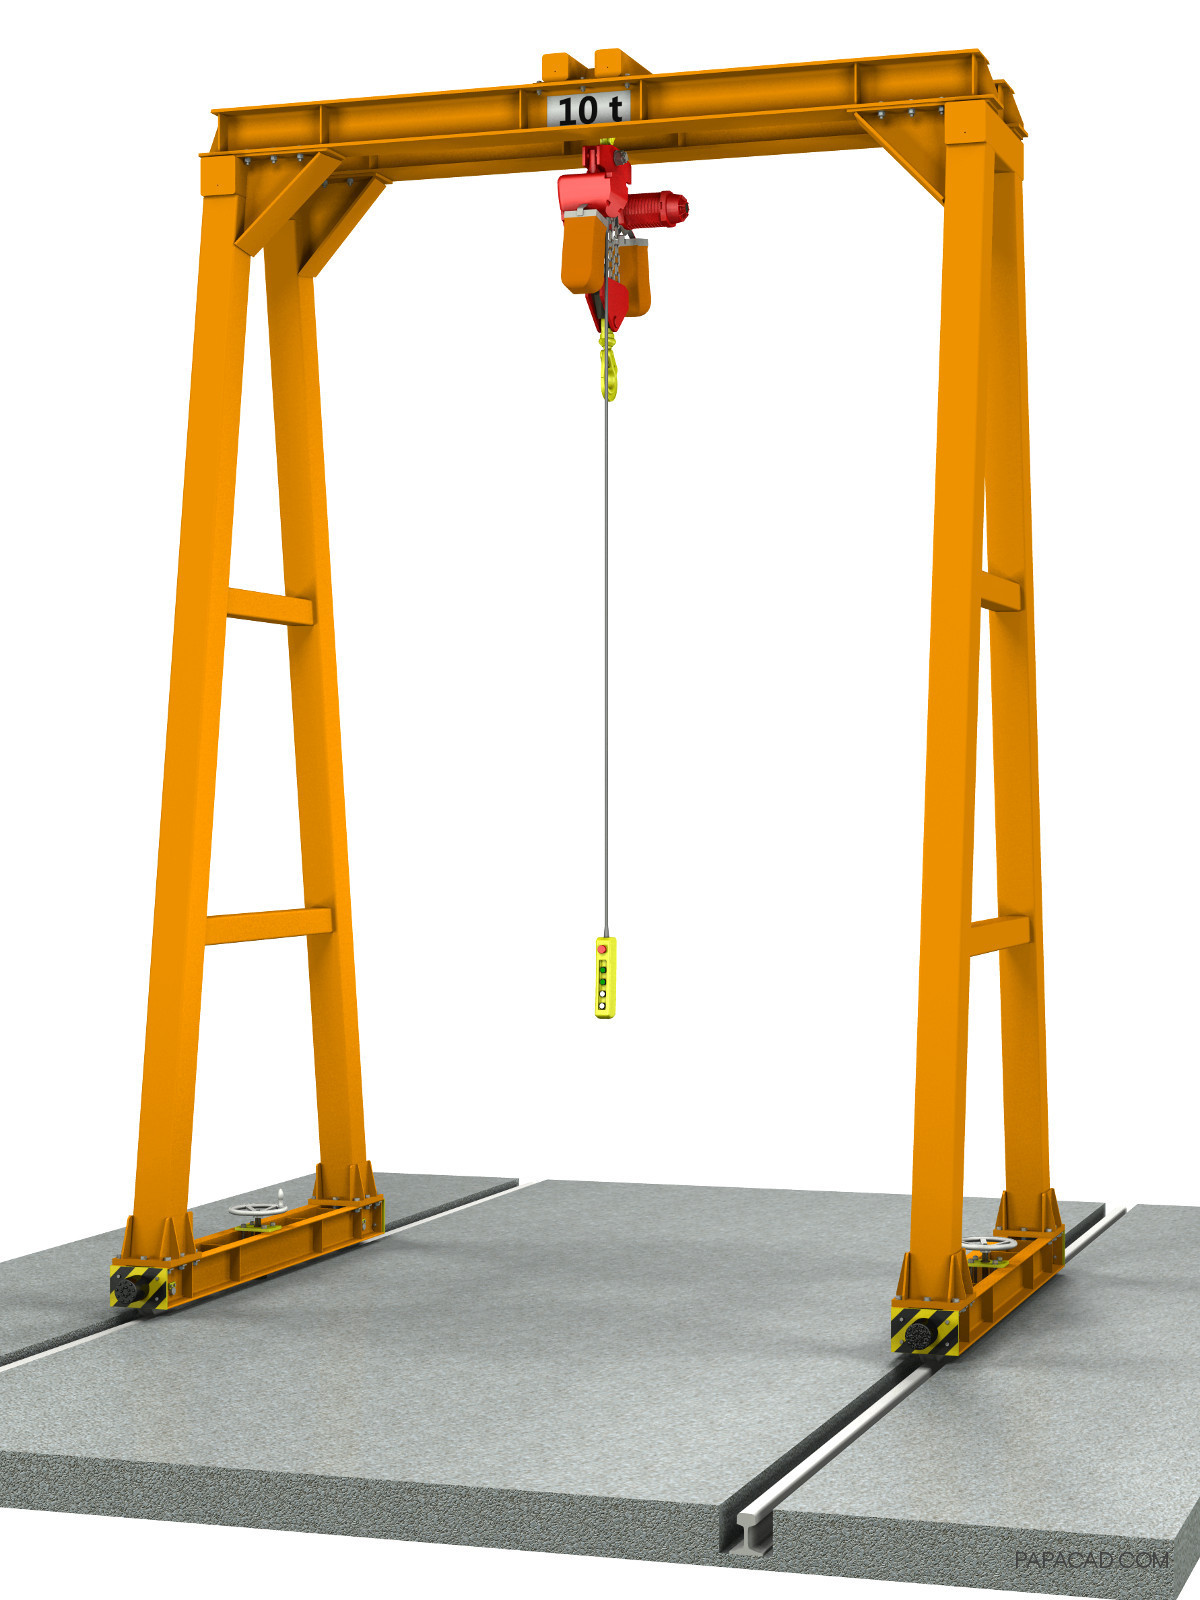 Best ideas about DIY Gantry Crane Plans
. Save or Pin Gantry Crane design Download DIY Gantry crane project Now.